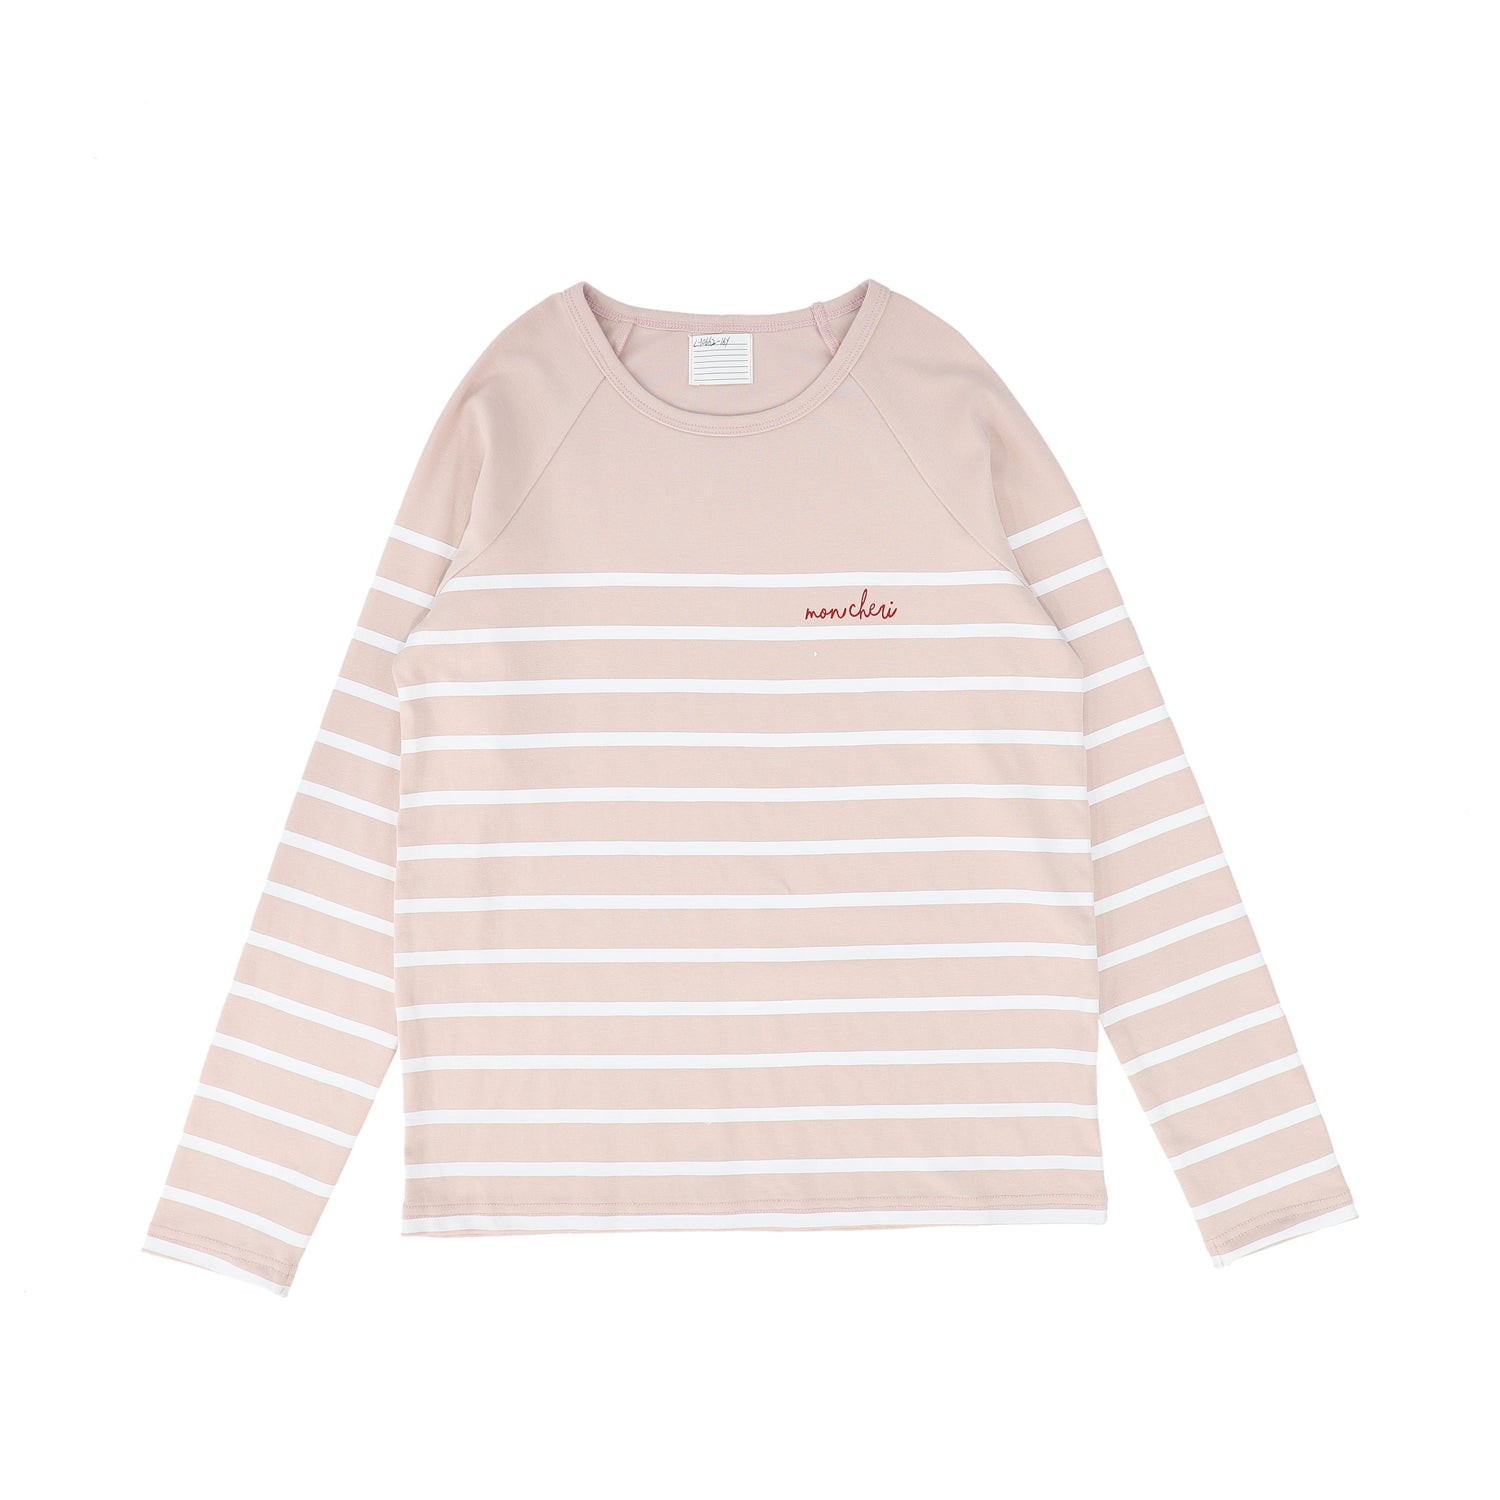 Bamboo Pink Striped Long Sleeve Tee Shirt